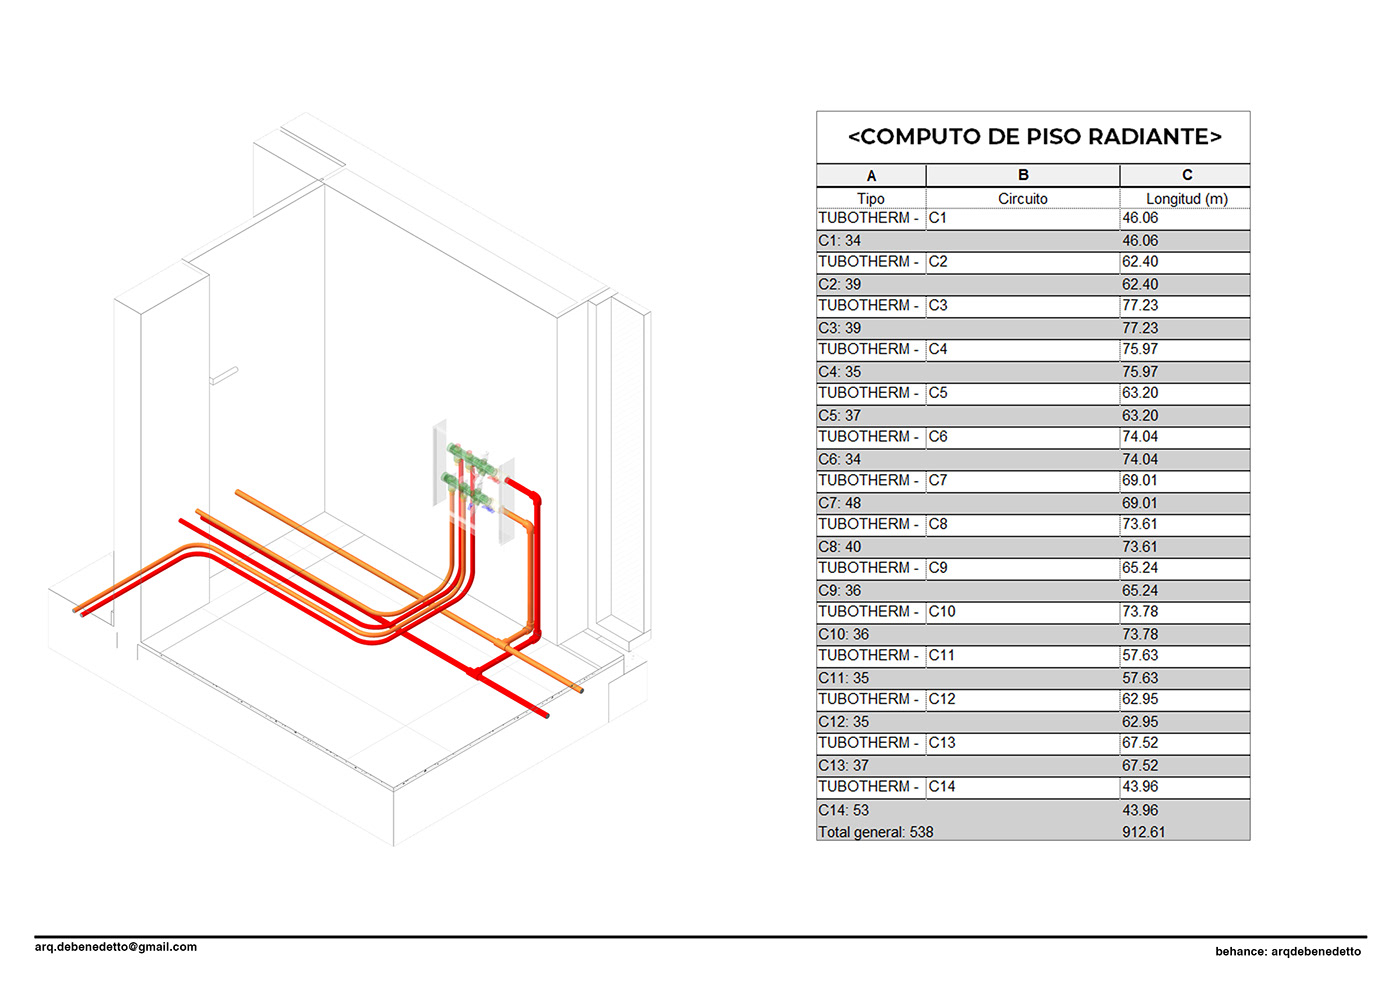 revit BIM MEP HVAC Pipe architecture coordination piping structural design